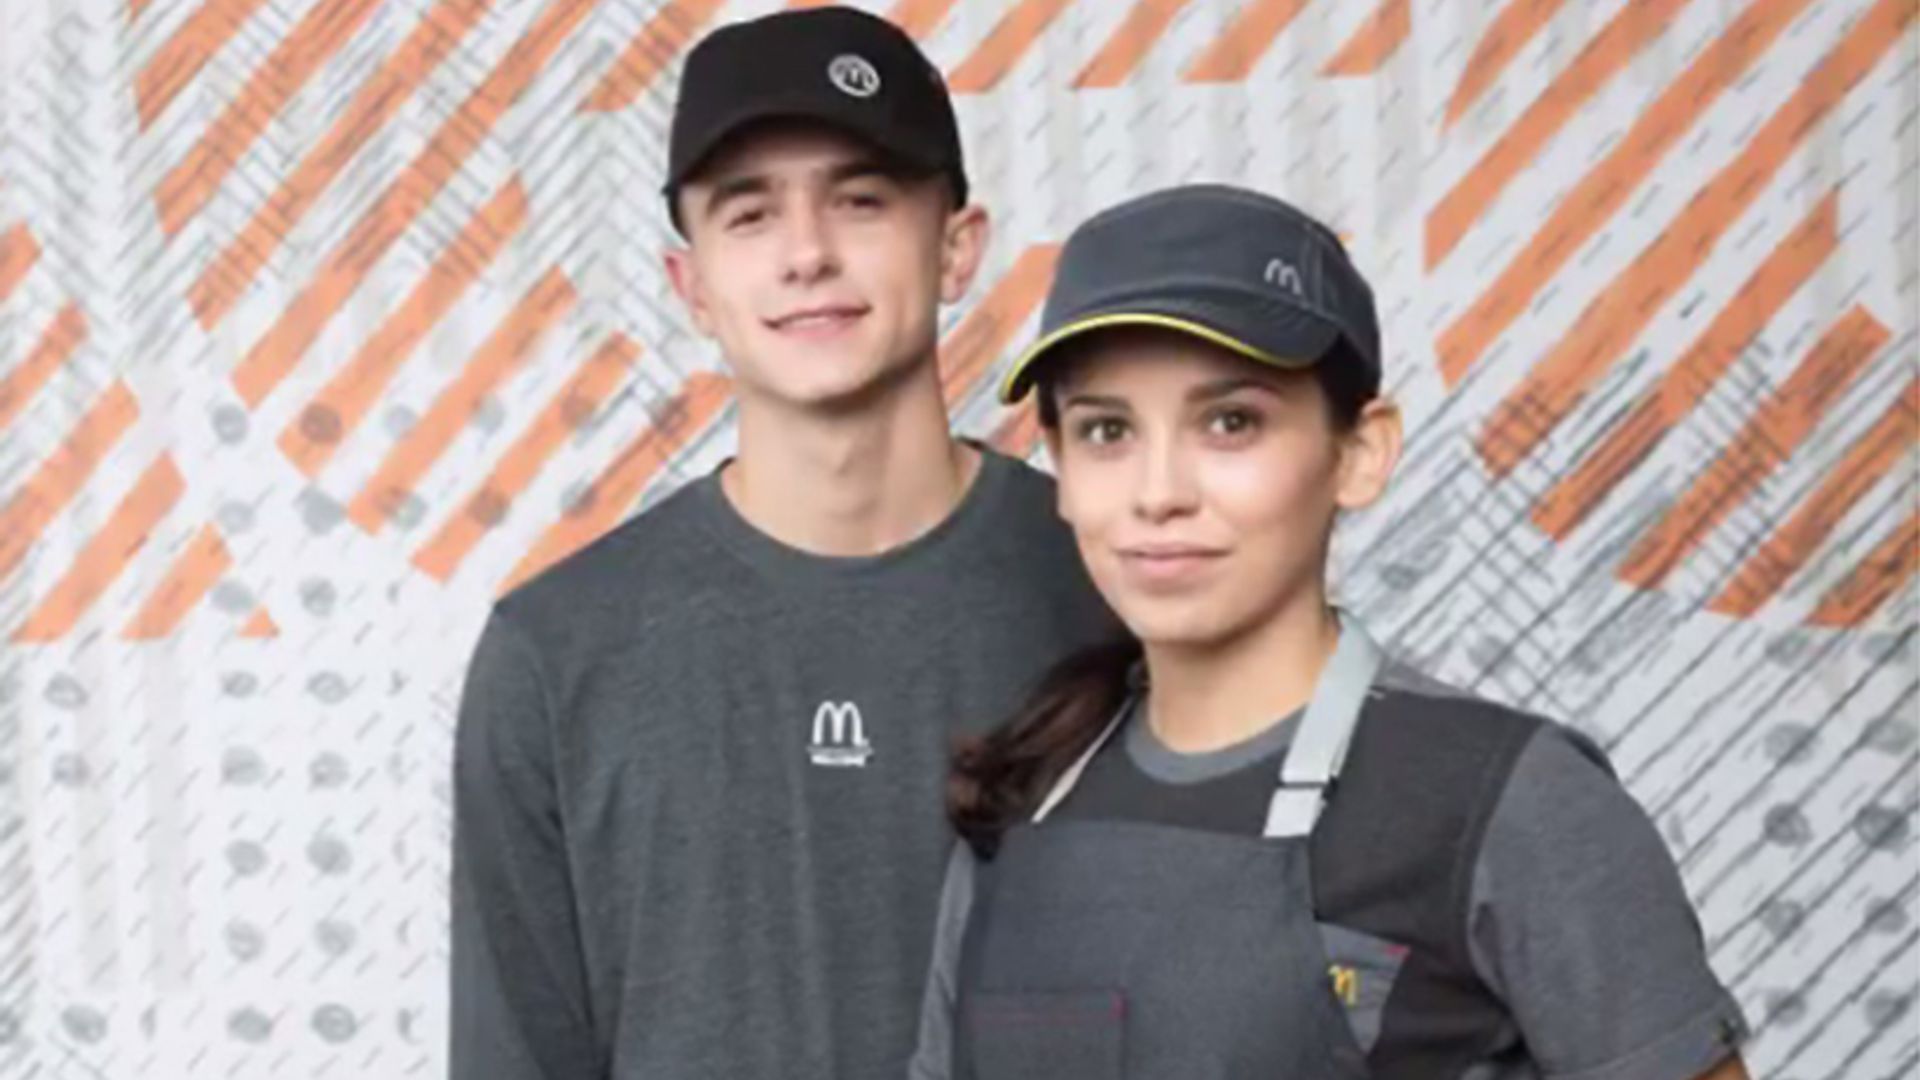 McDonald's reveal new staff uniform – are you lovin' it?